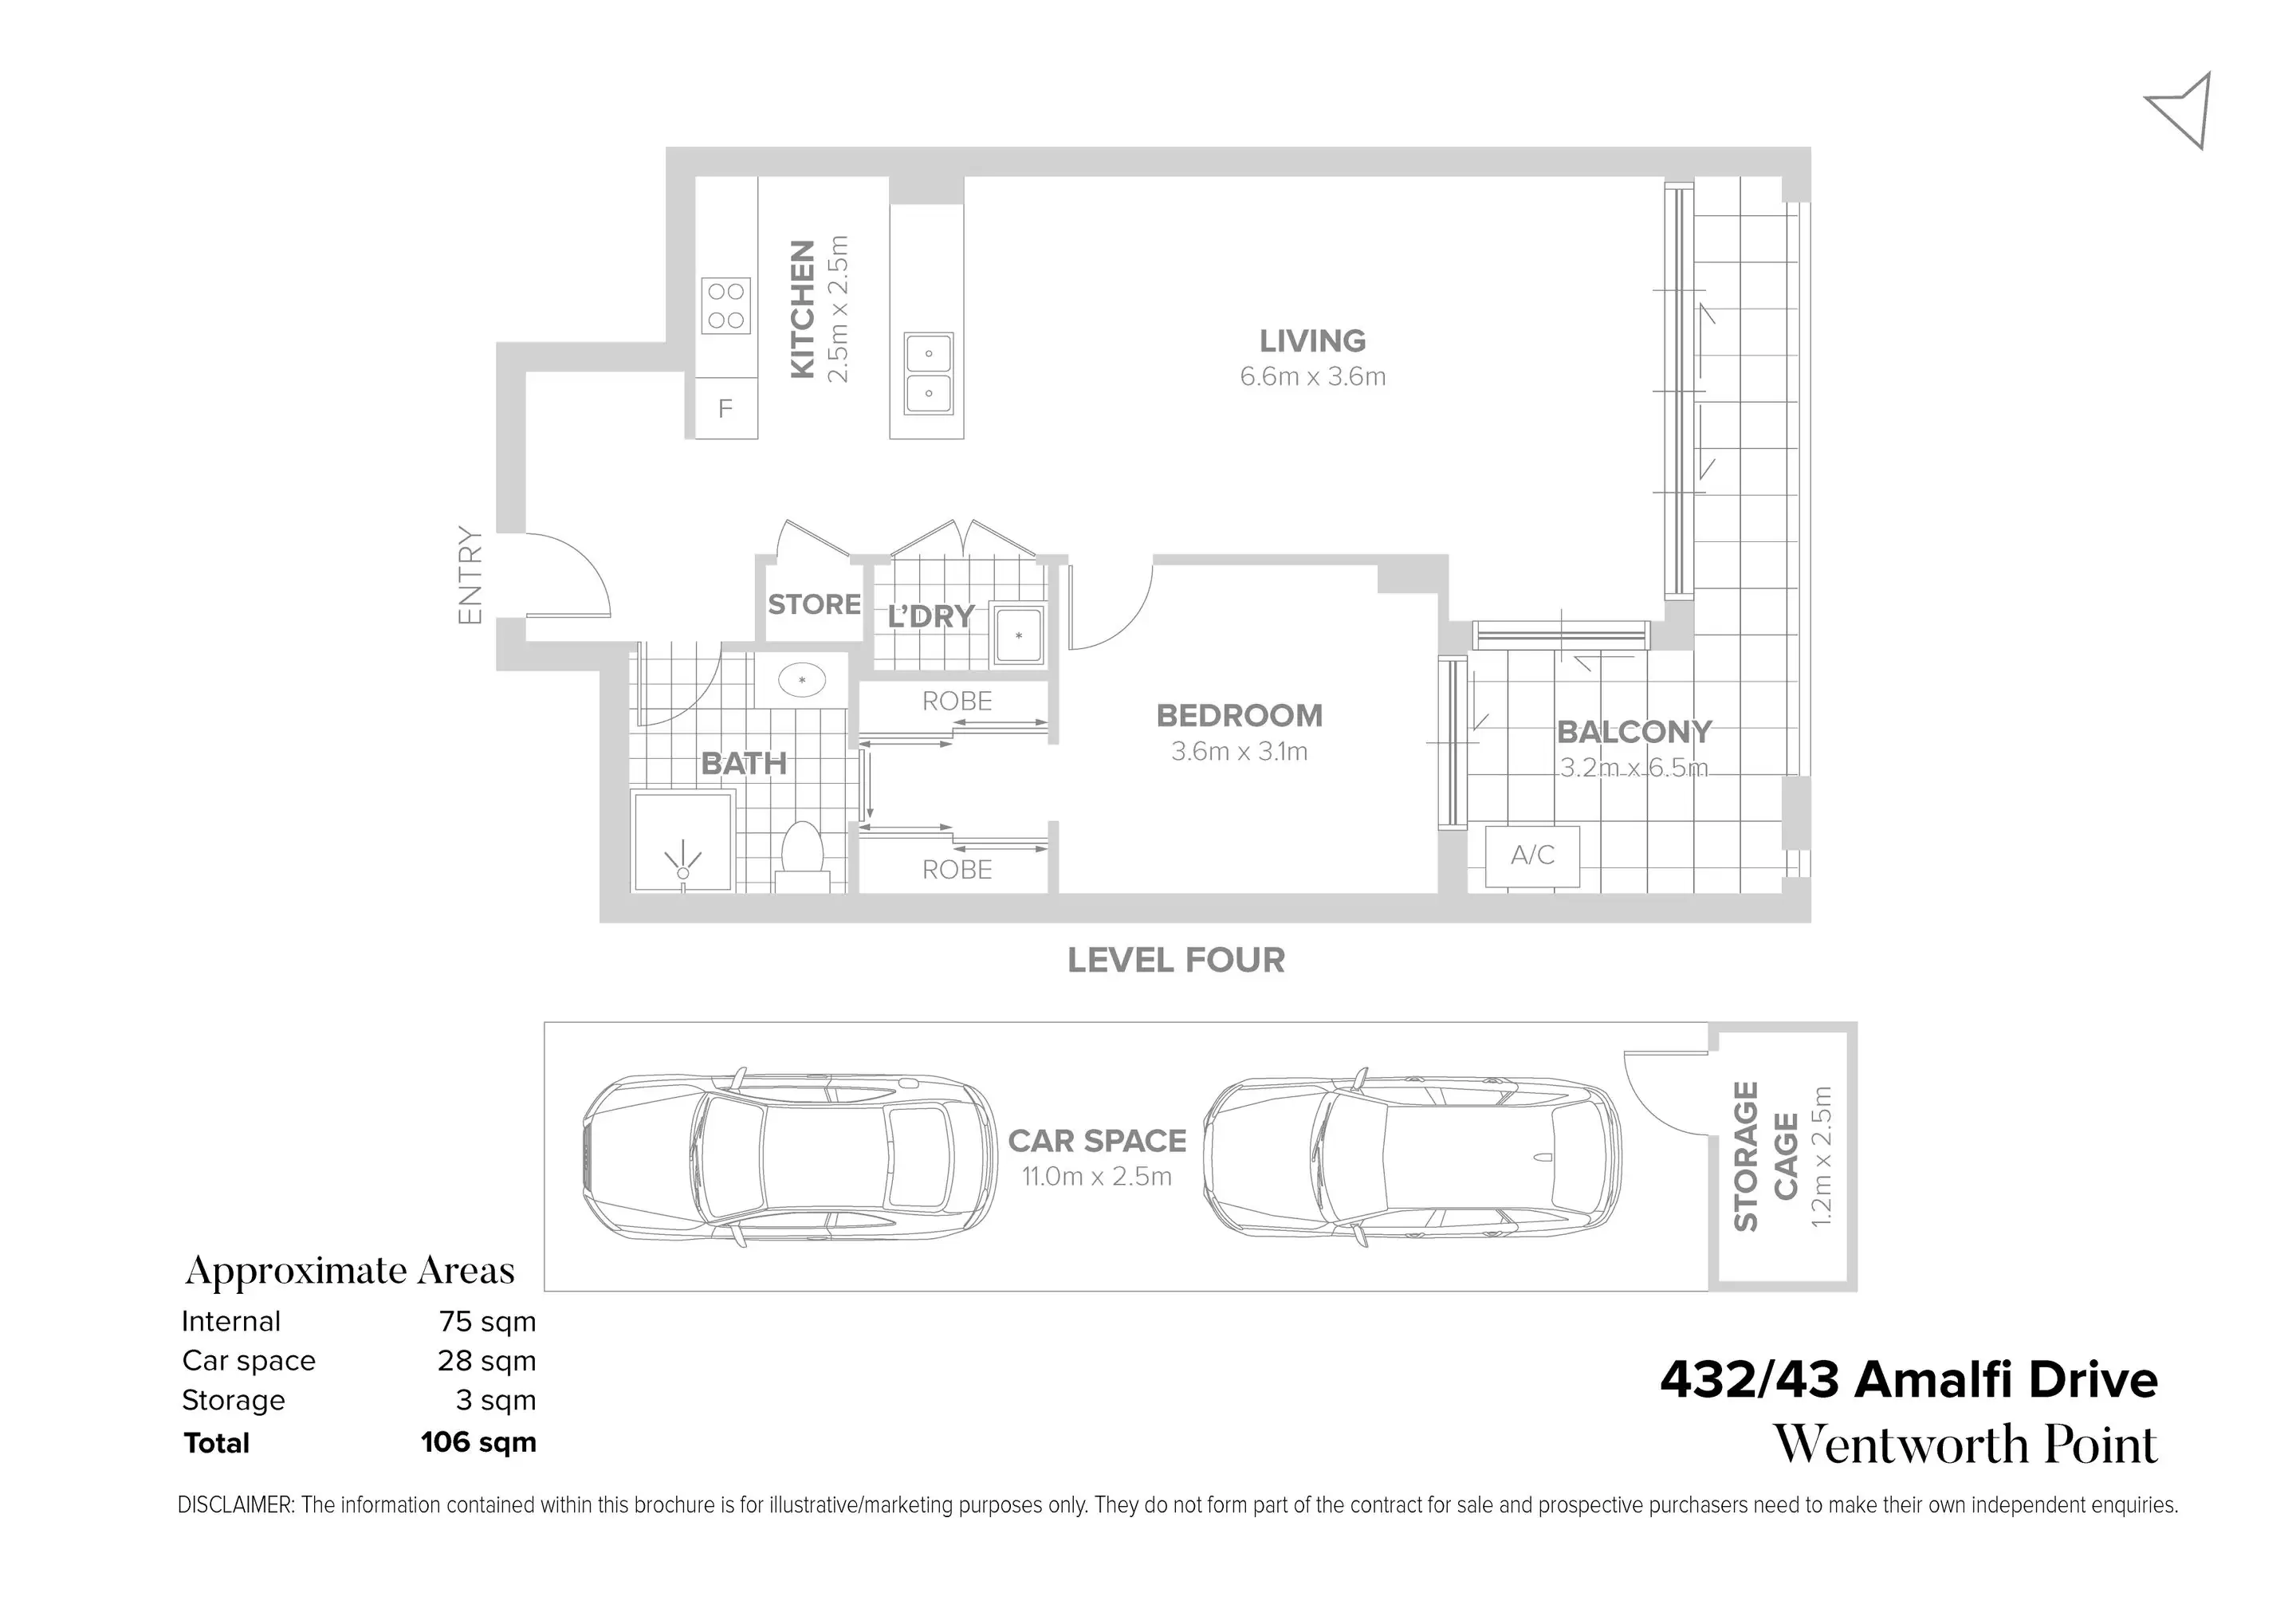 432/43 Amalfi Drive, Wentworth Point Sold by Chidiac Realty - floorplan